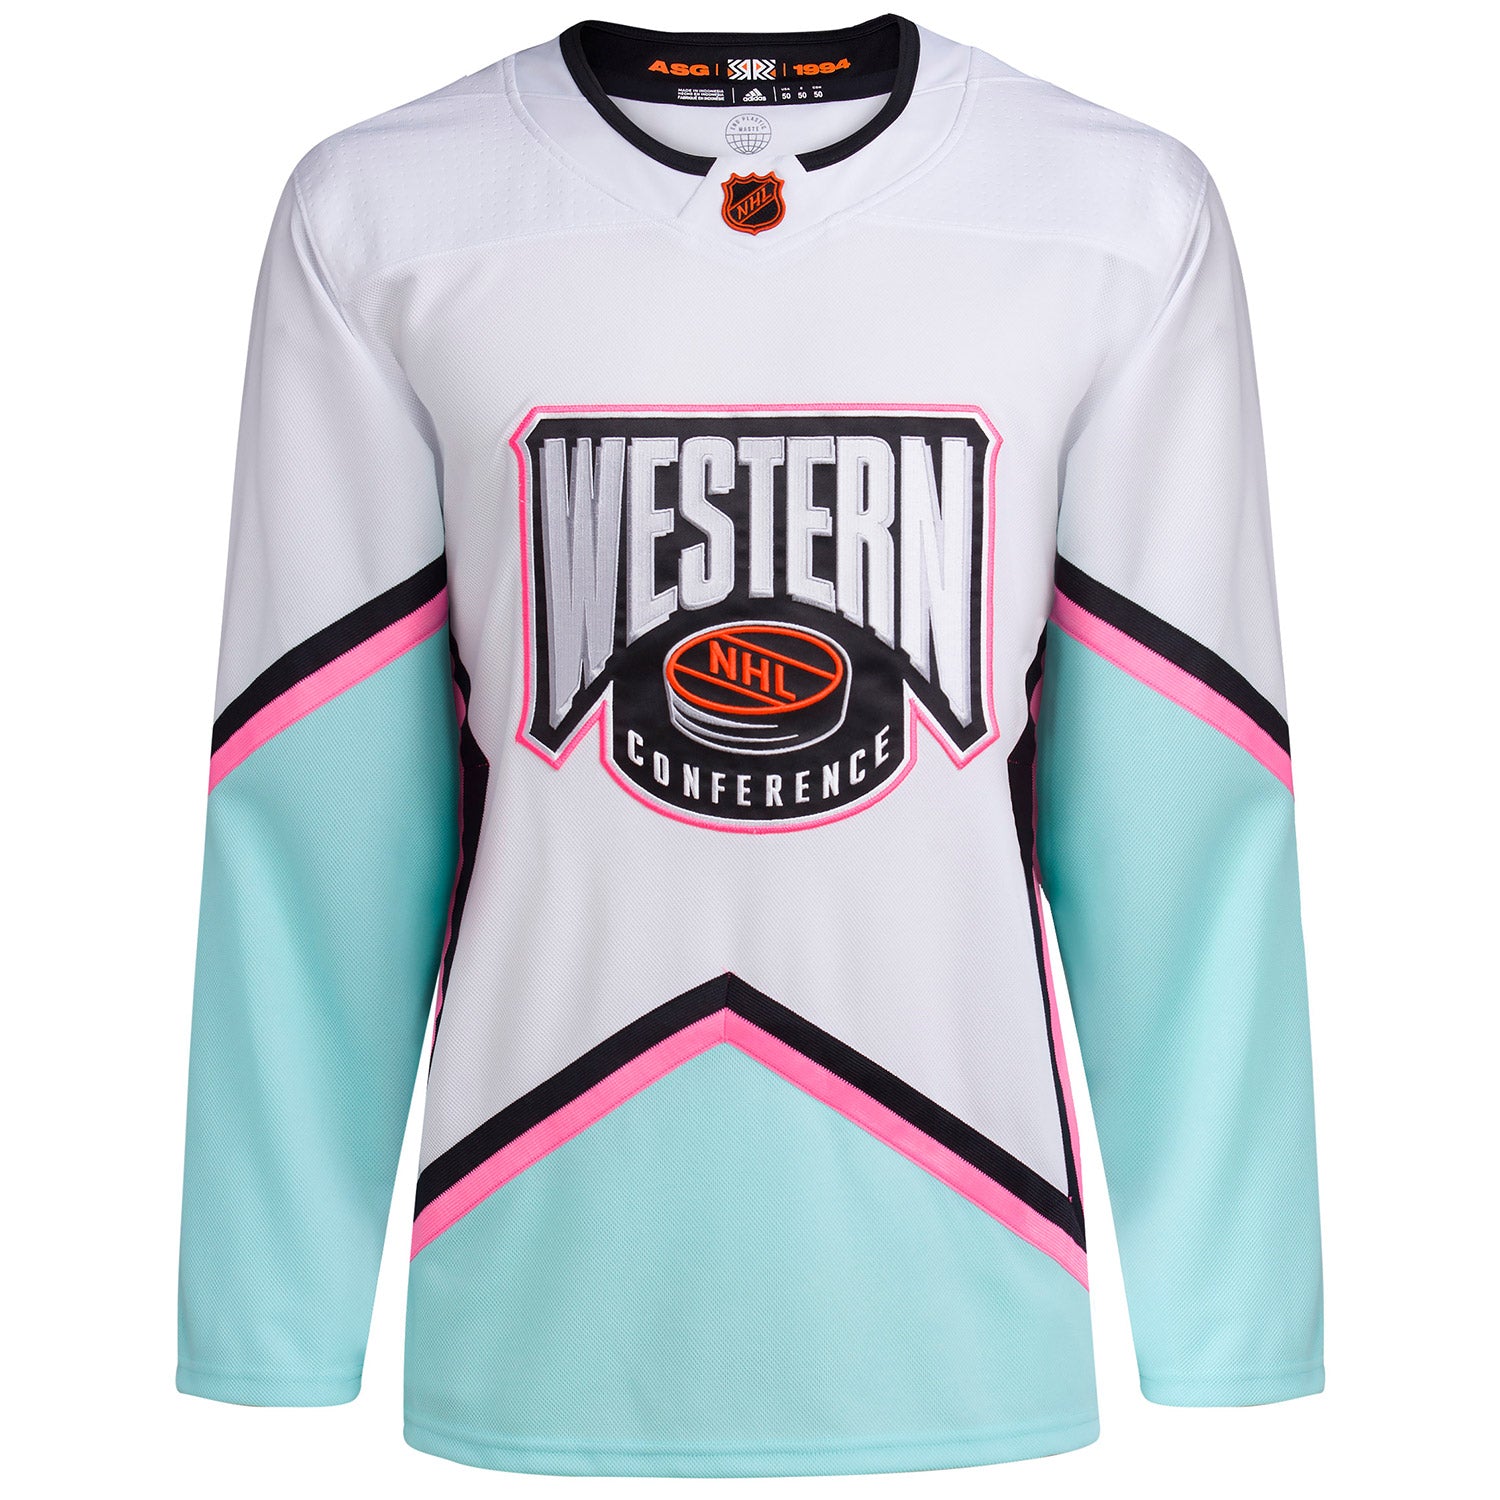 NHL All-Star Game 2022 shirts, pucks, jerseys: Where to buy